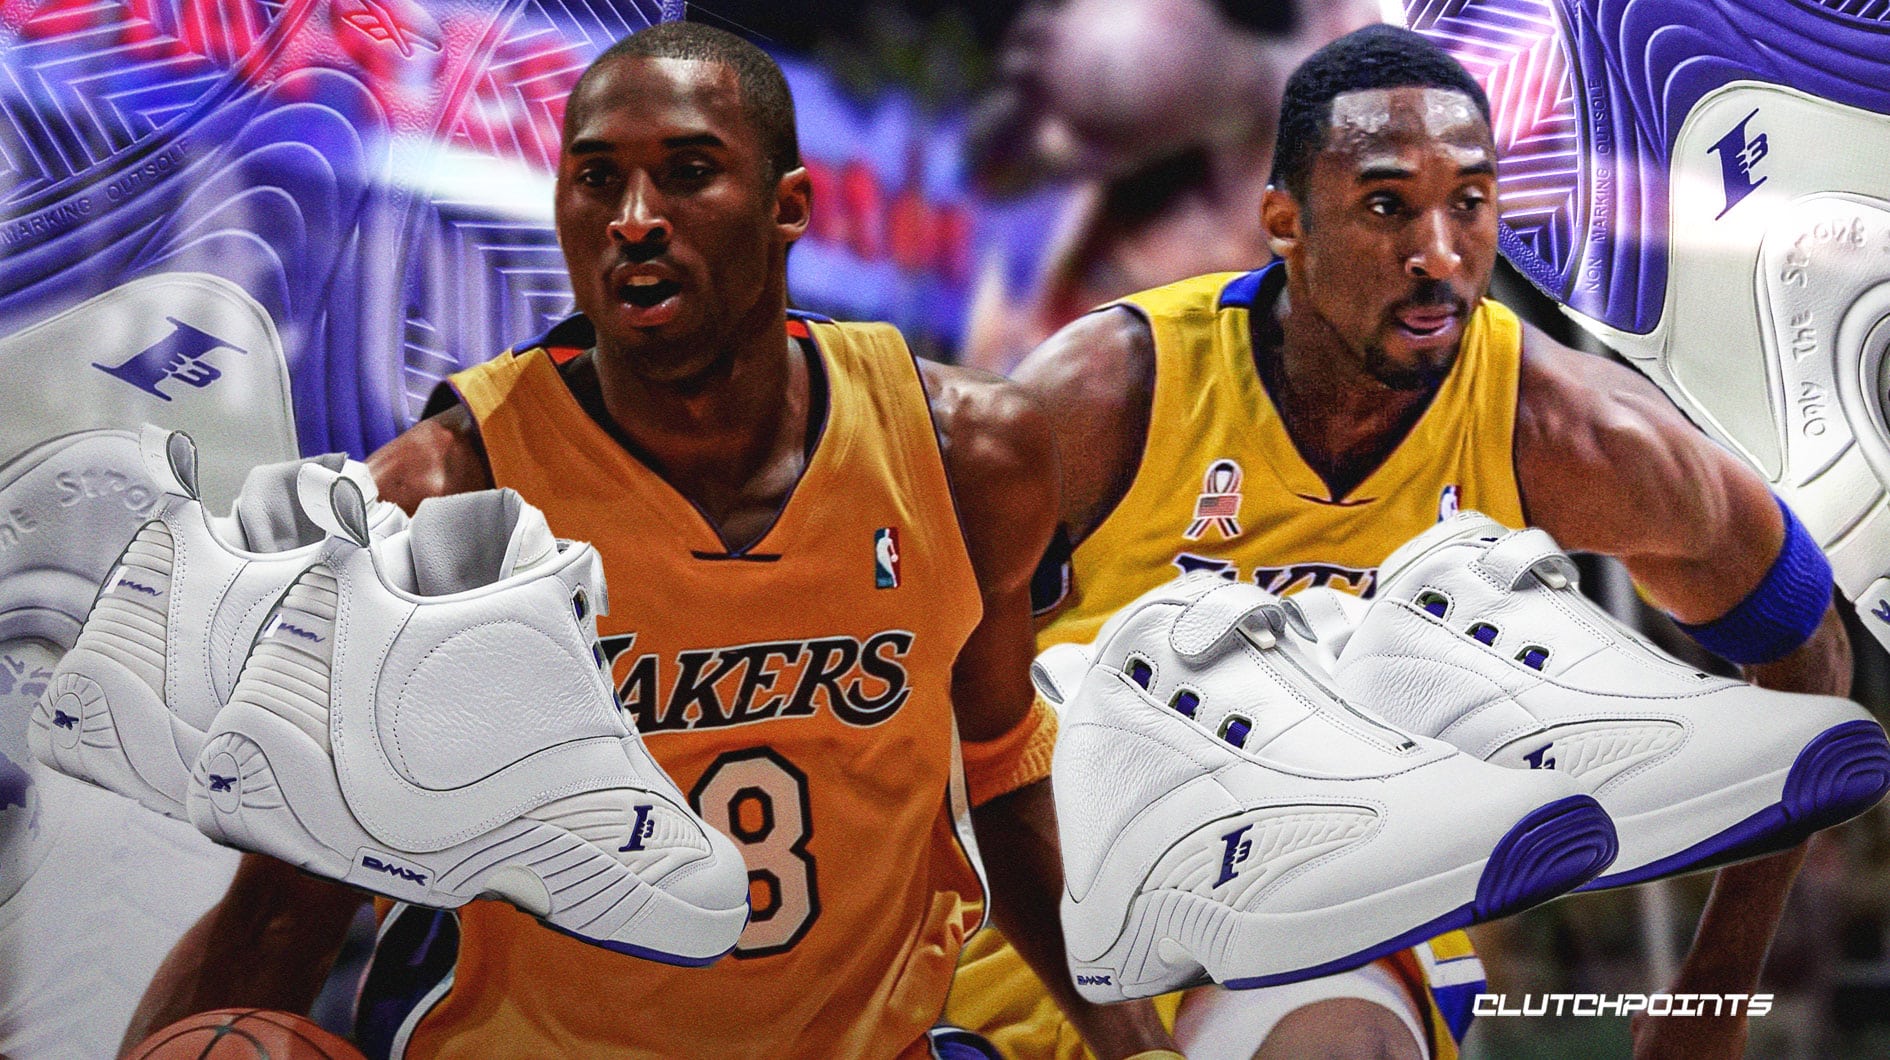 Kobe Bryant exclusive Reebok sneakers are coming back